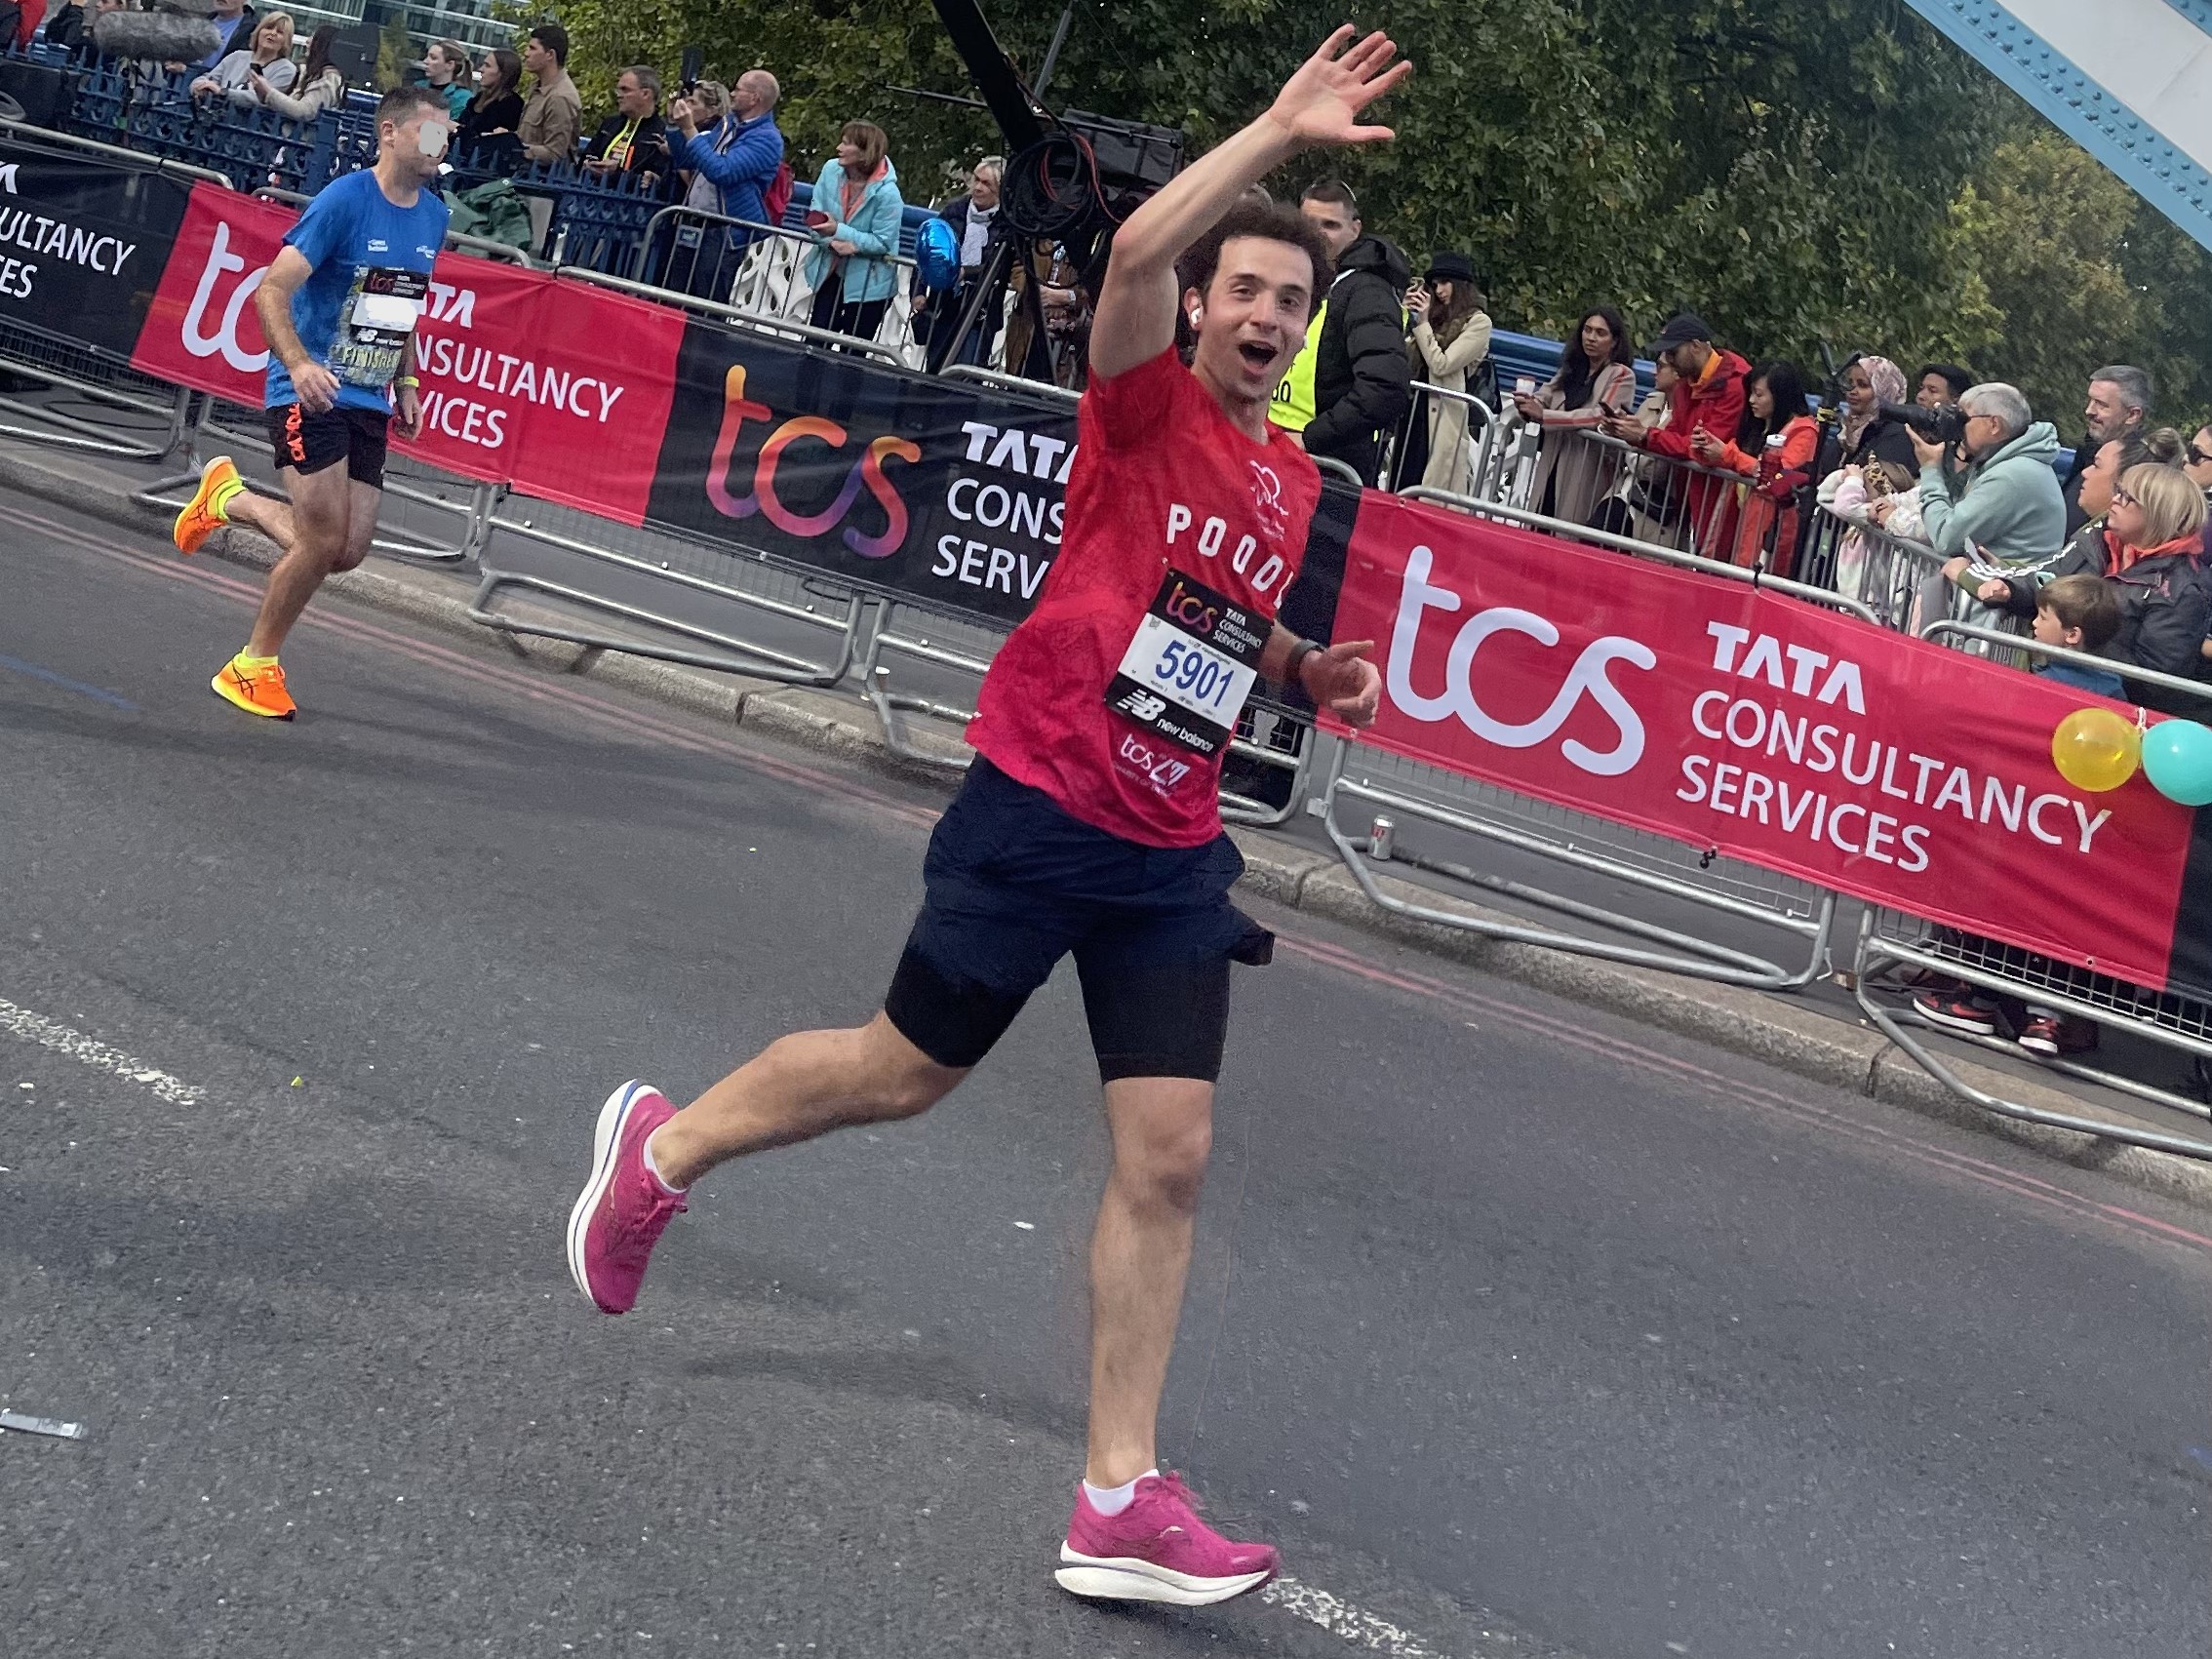 Jacopo running the London Marathon